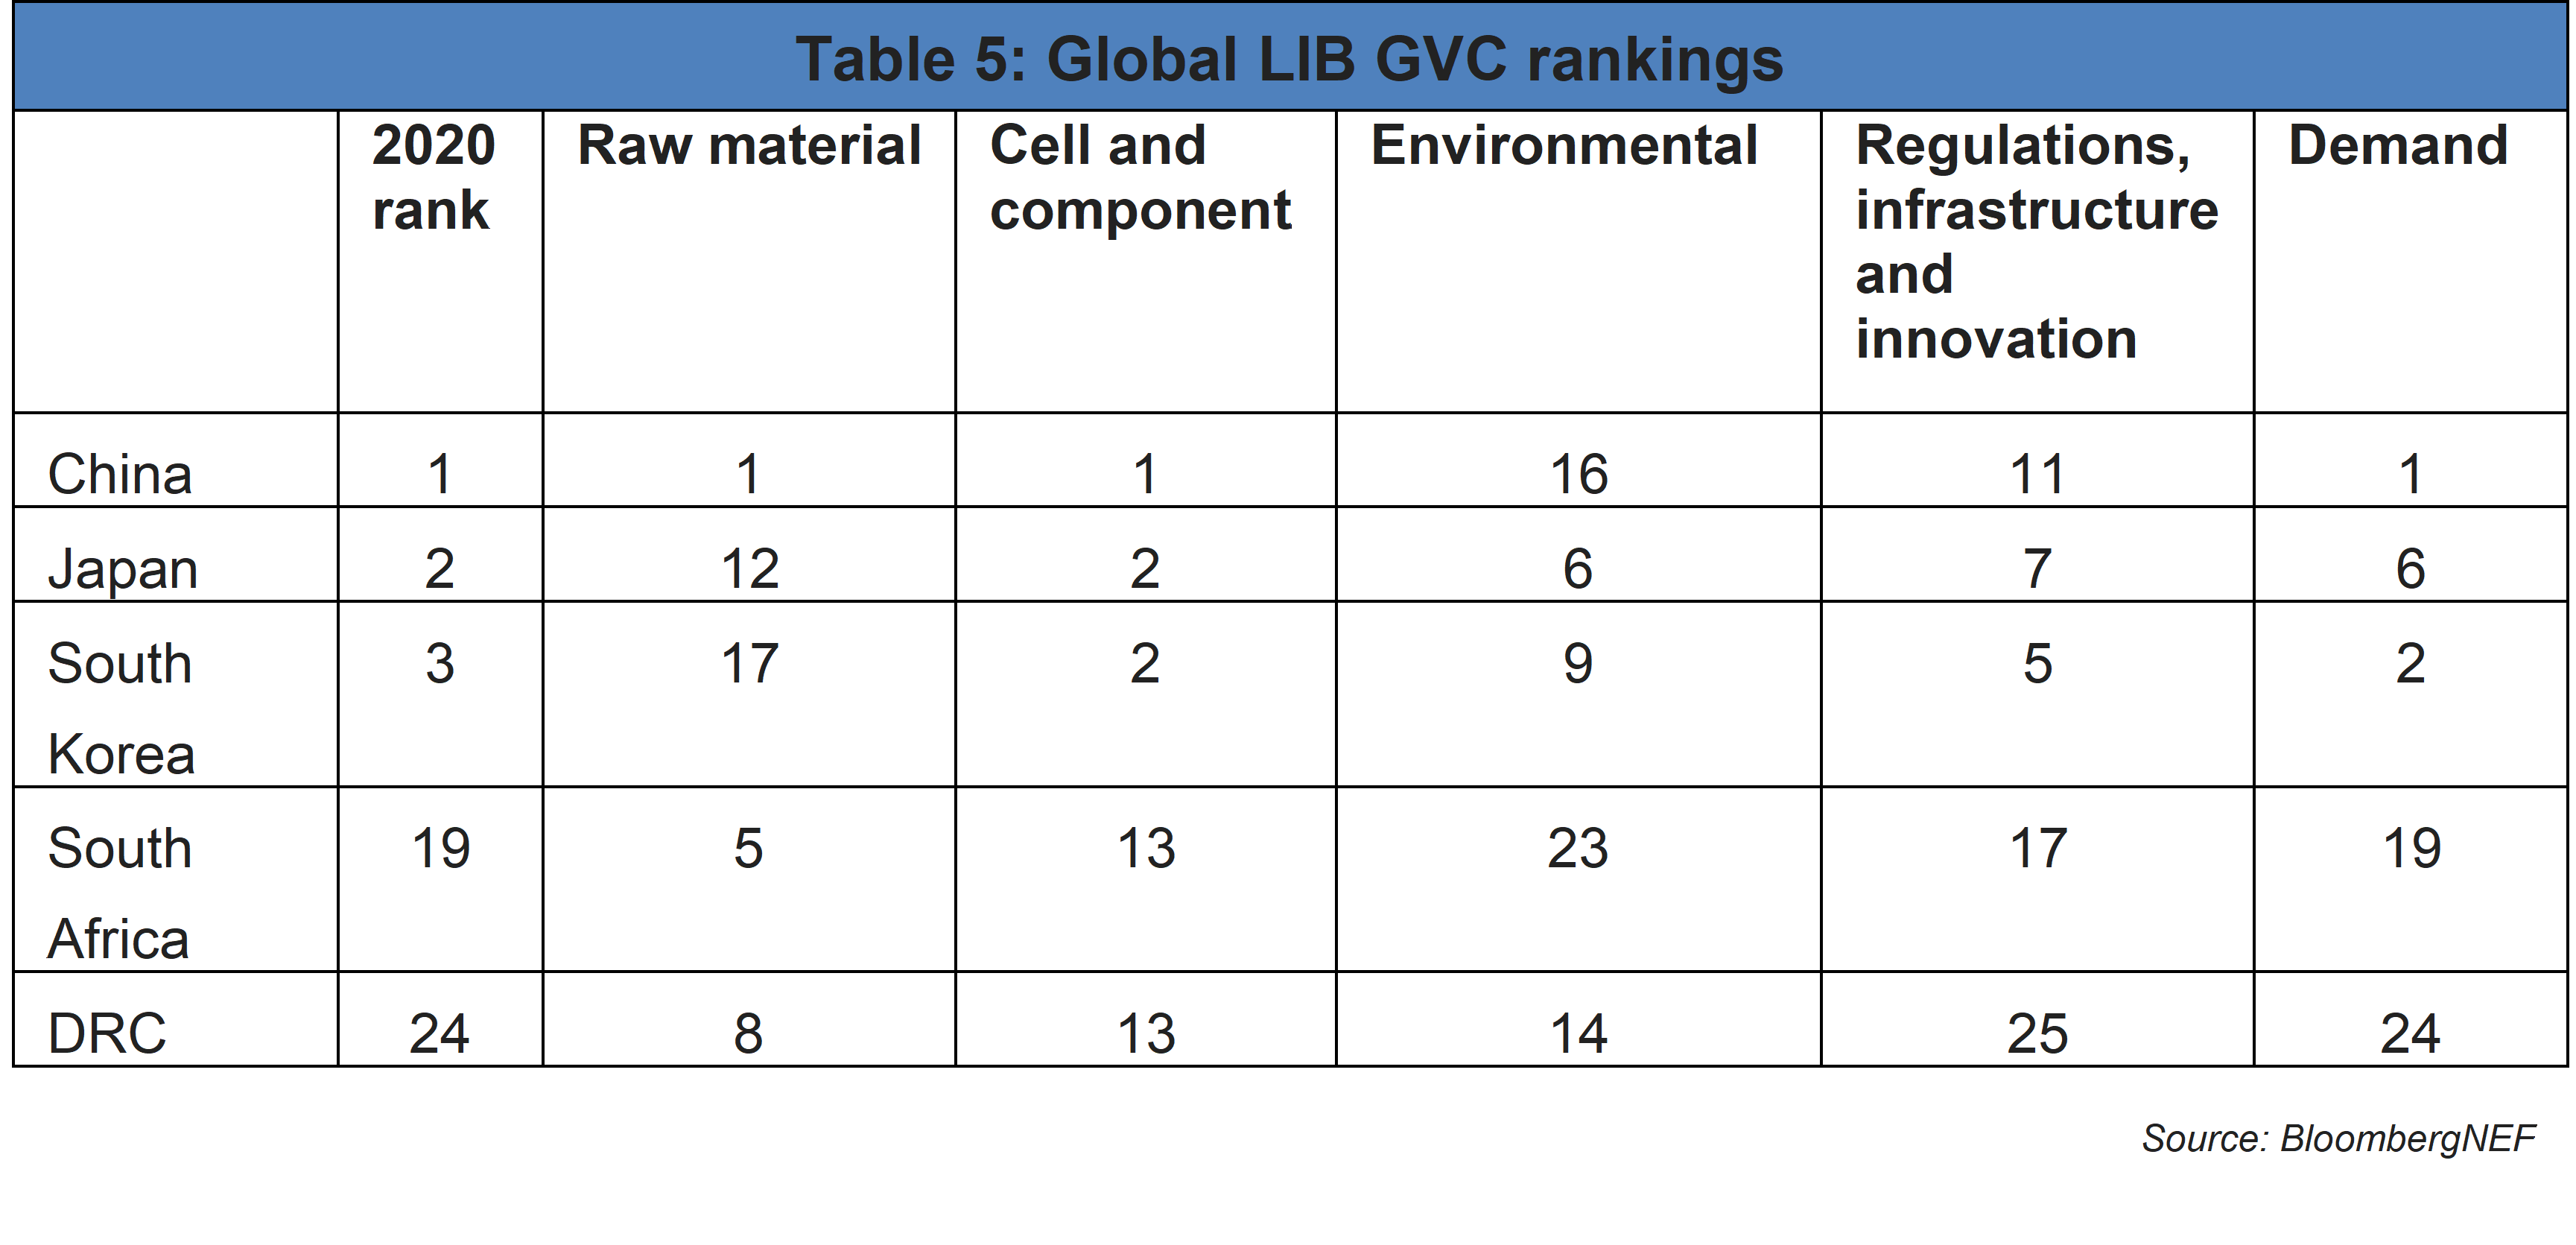 Global LIB GIV rankings